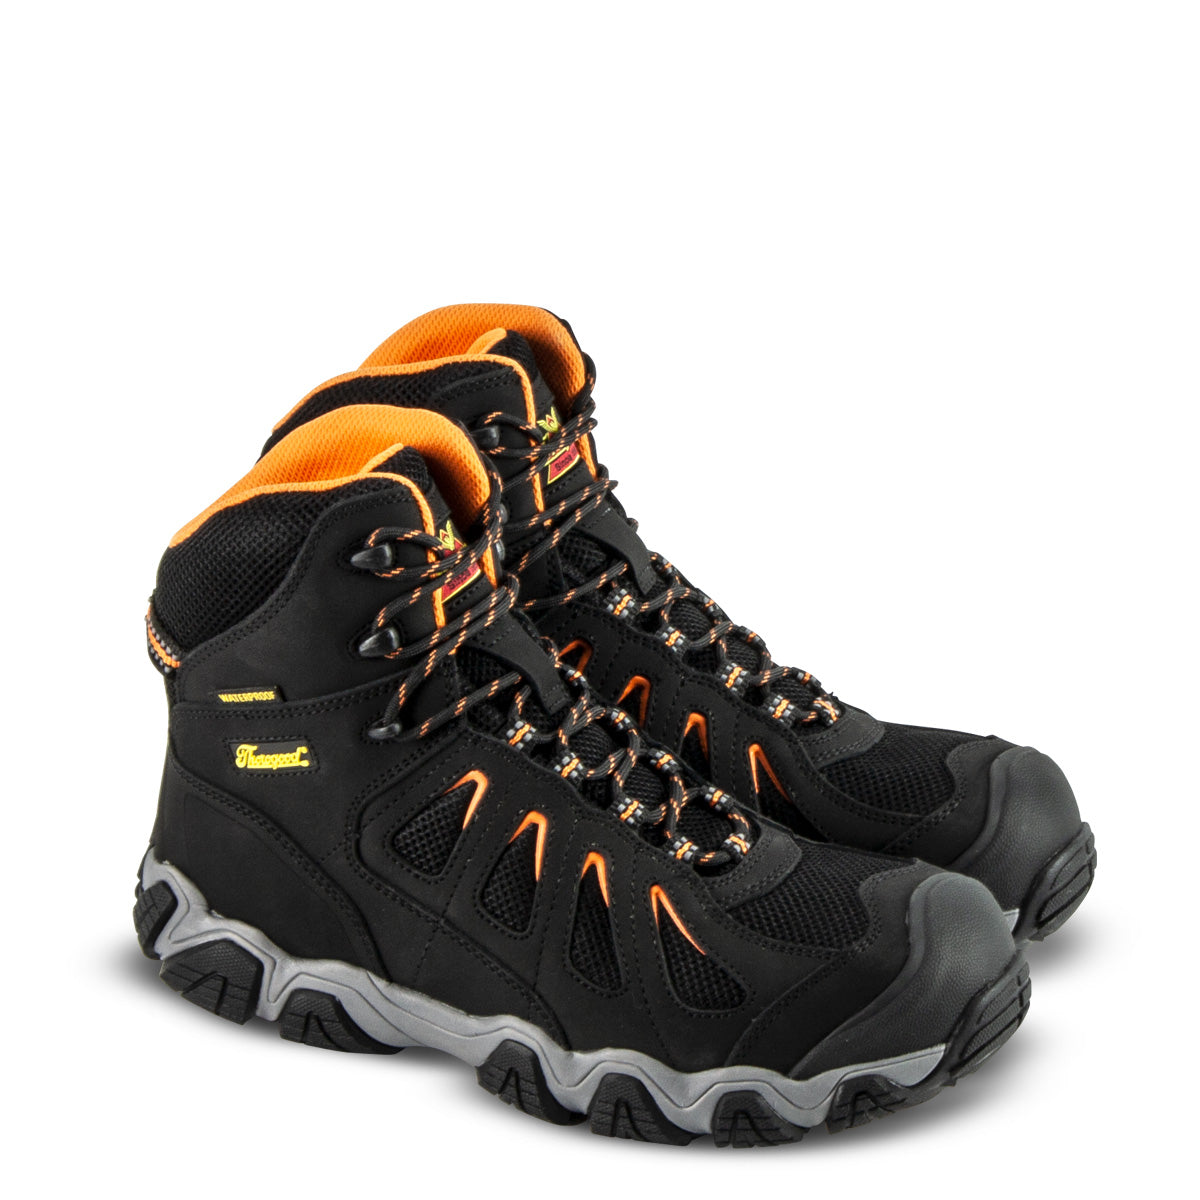 Thorogood Men's Crosstrex Series 6" Waterproof Composite Safety Toe Work Boot in Black/Orange from the side